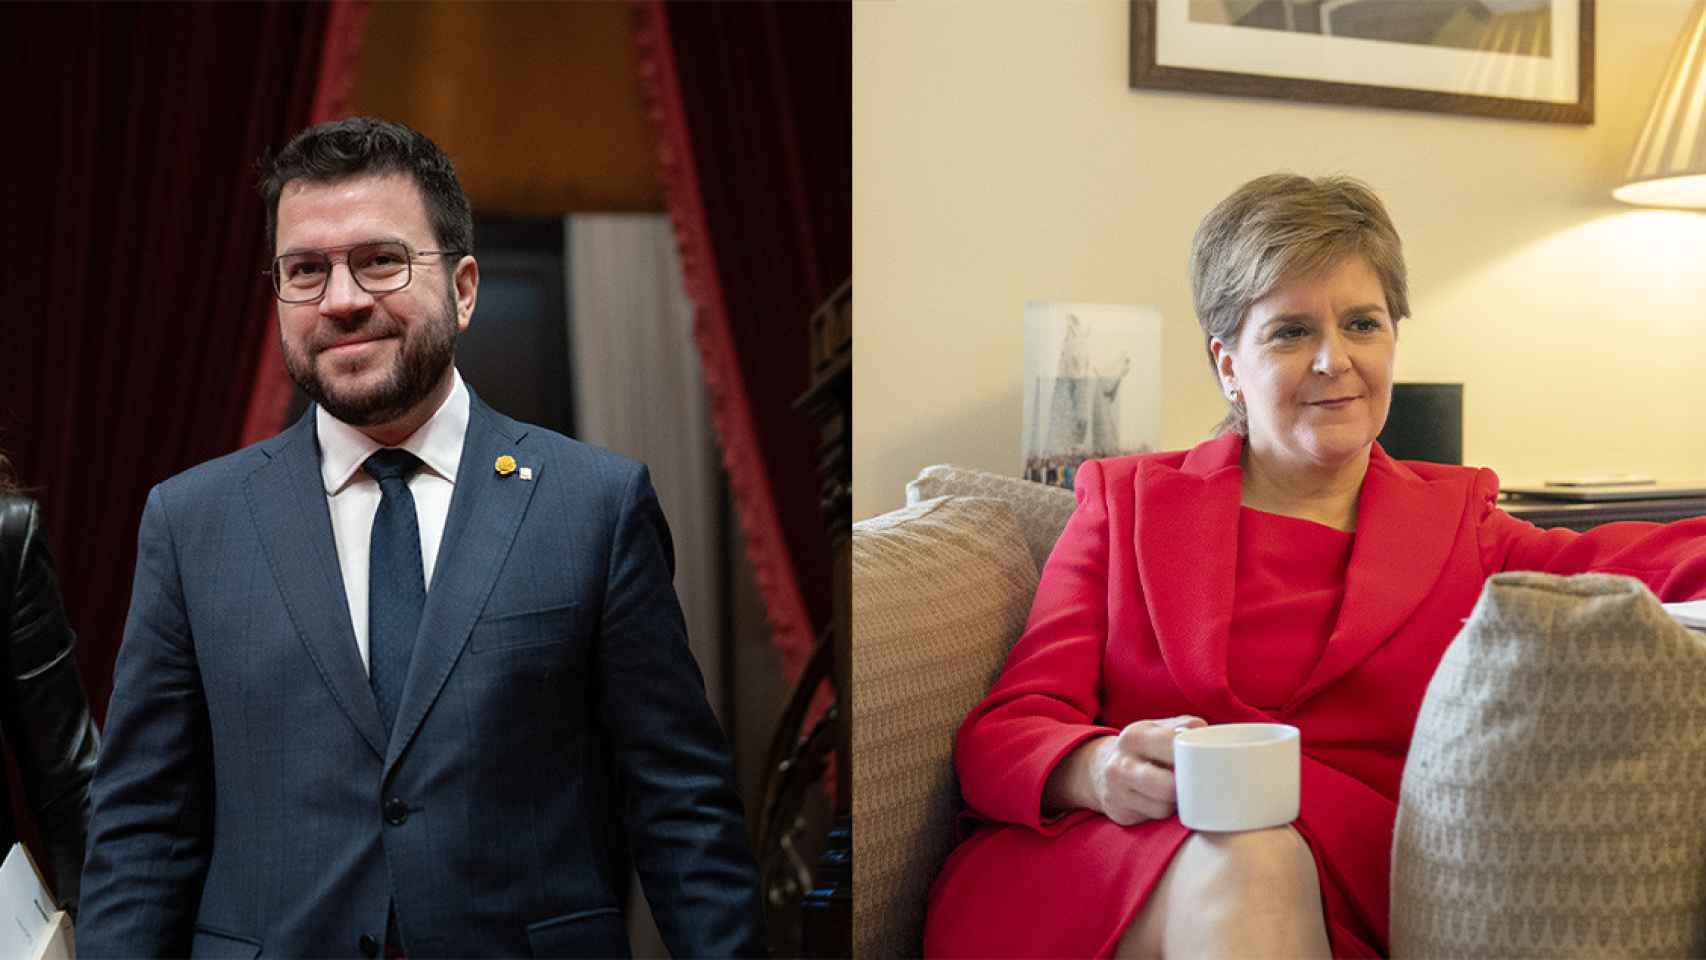 El presidente de la Generalitat de Cataluña, Pere Aragonès, y la exprimera ministra de Escocia, Nicola Sturgeon / JANE BARLOW - PA WIRE DAVID ZORRAKINO - EUROPA PRESS